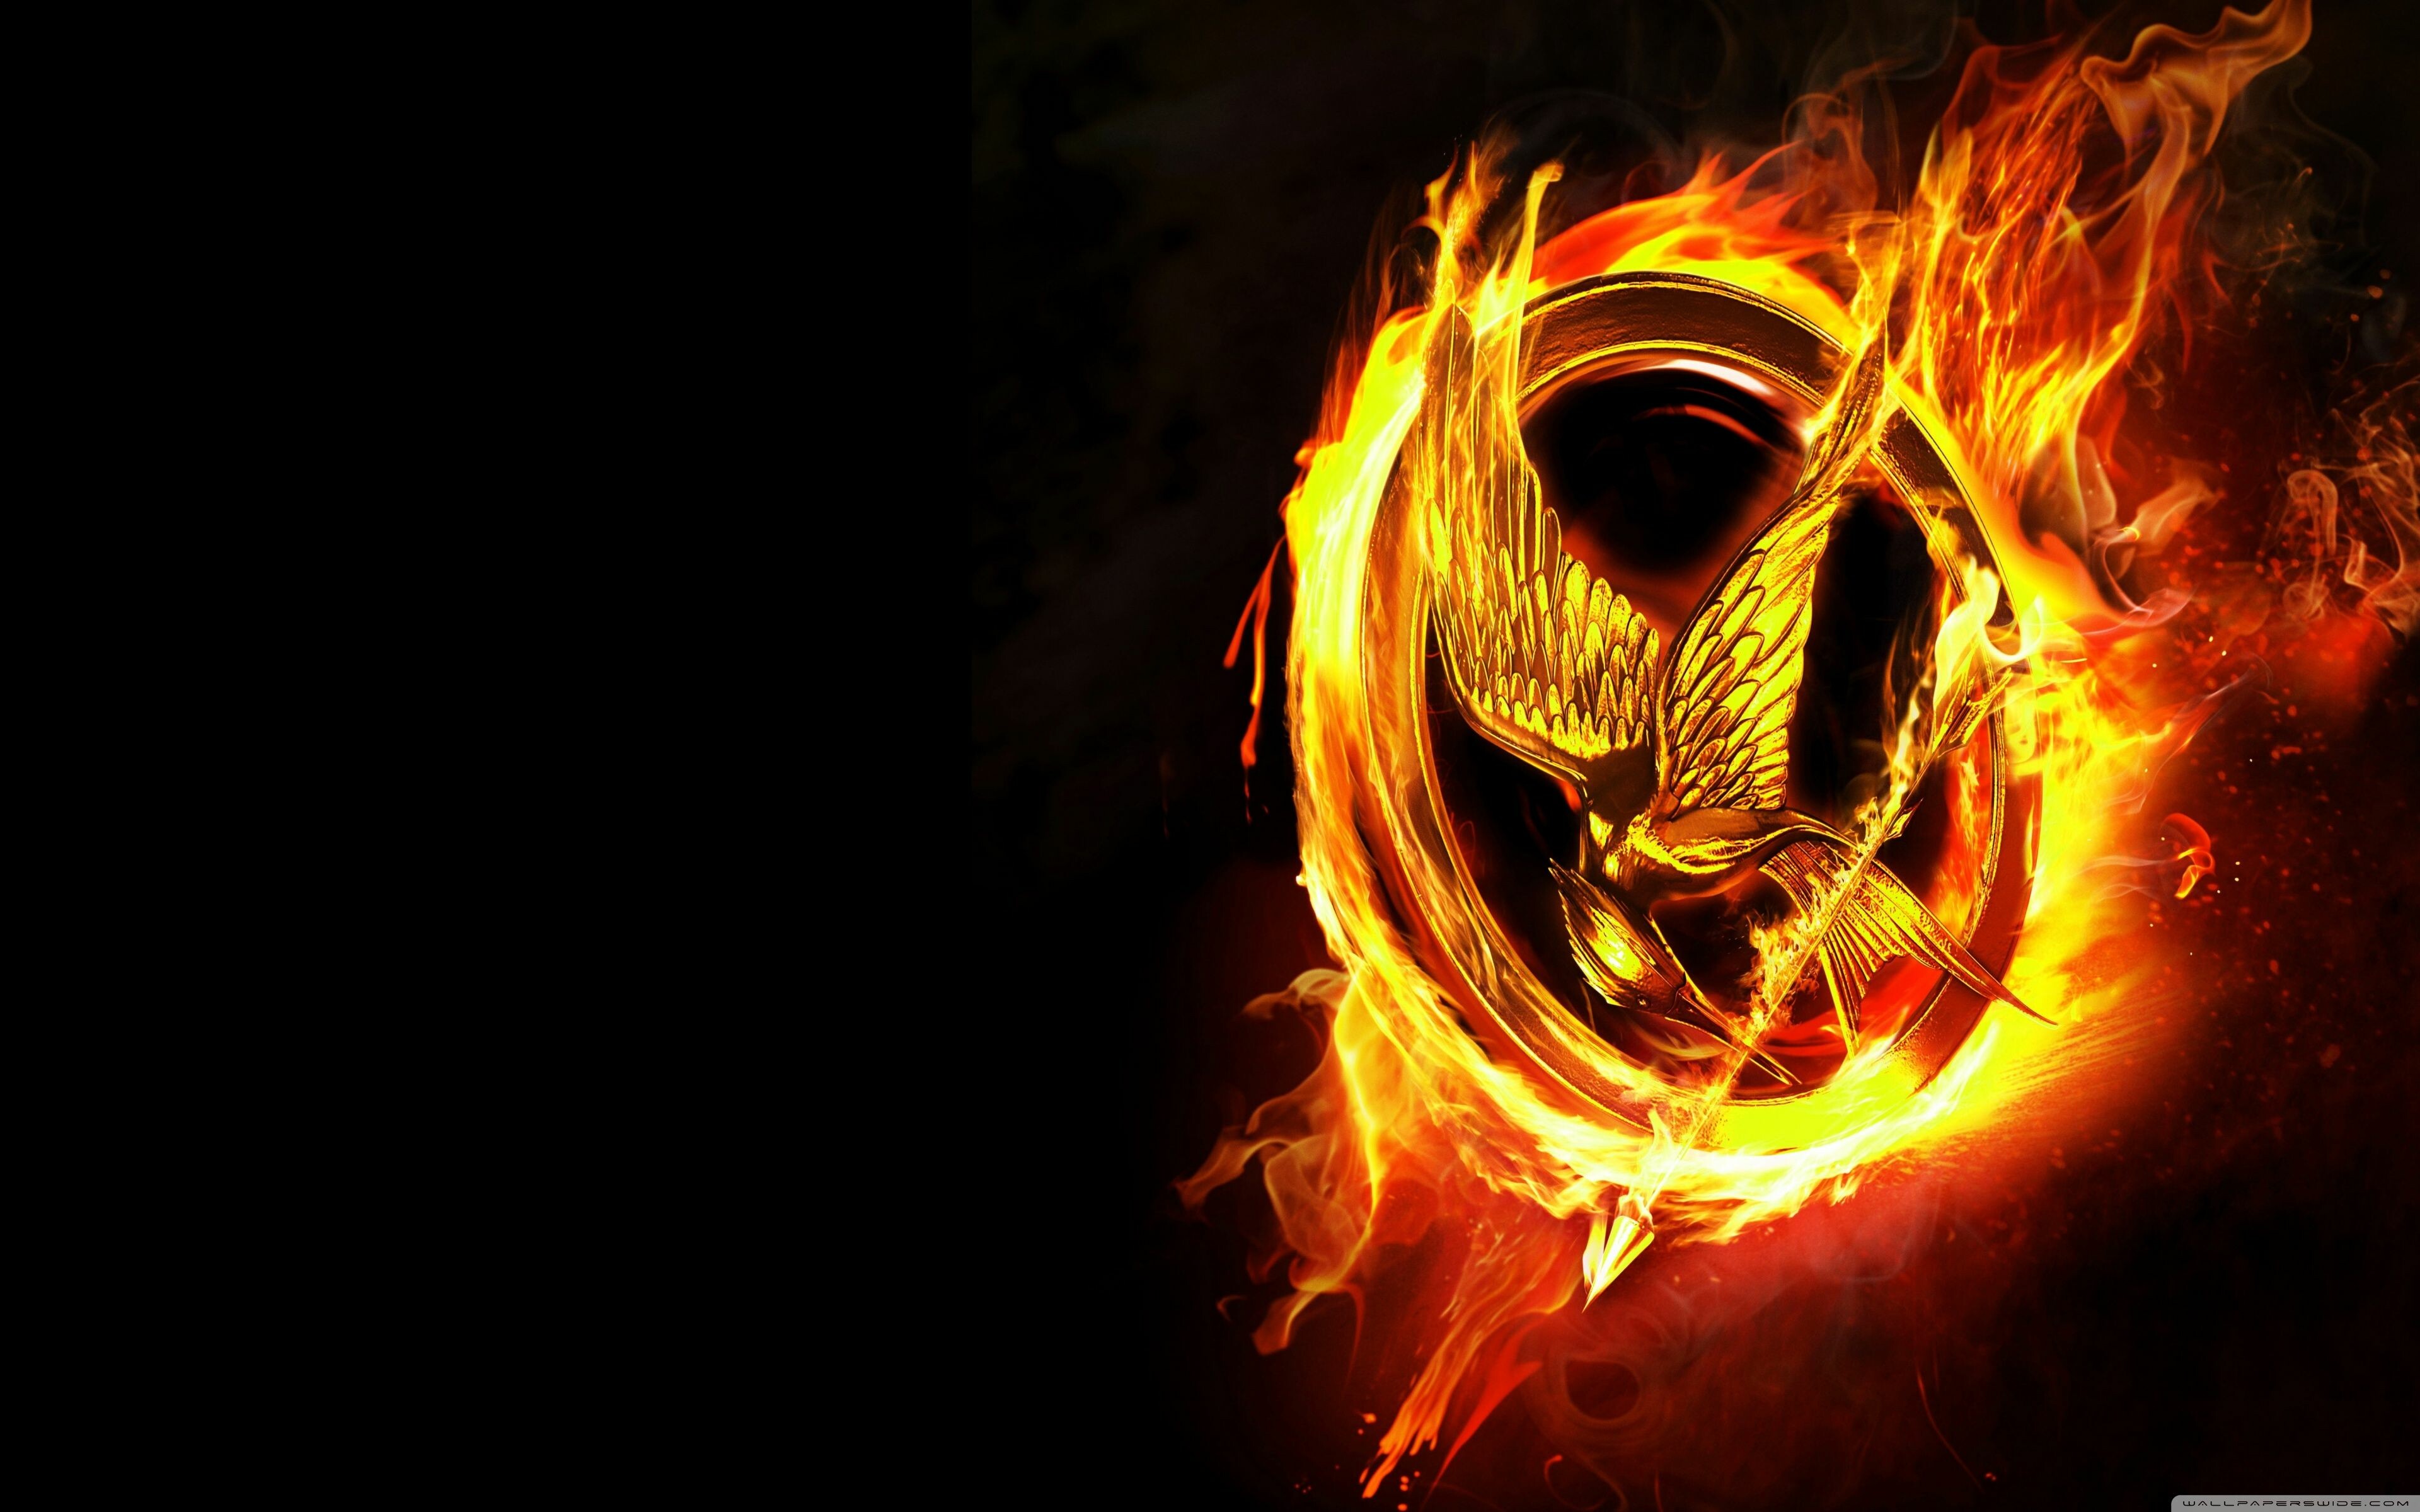 Wallpaper The Hunger Games Mockingjay  Part 2 Best Movies Effi trinket  Katniss Elizabeth Banks Jennifer Lawrence Movies 8169